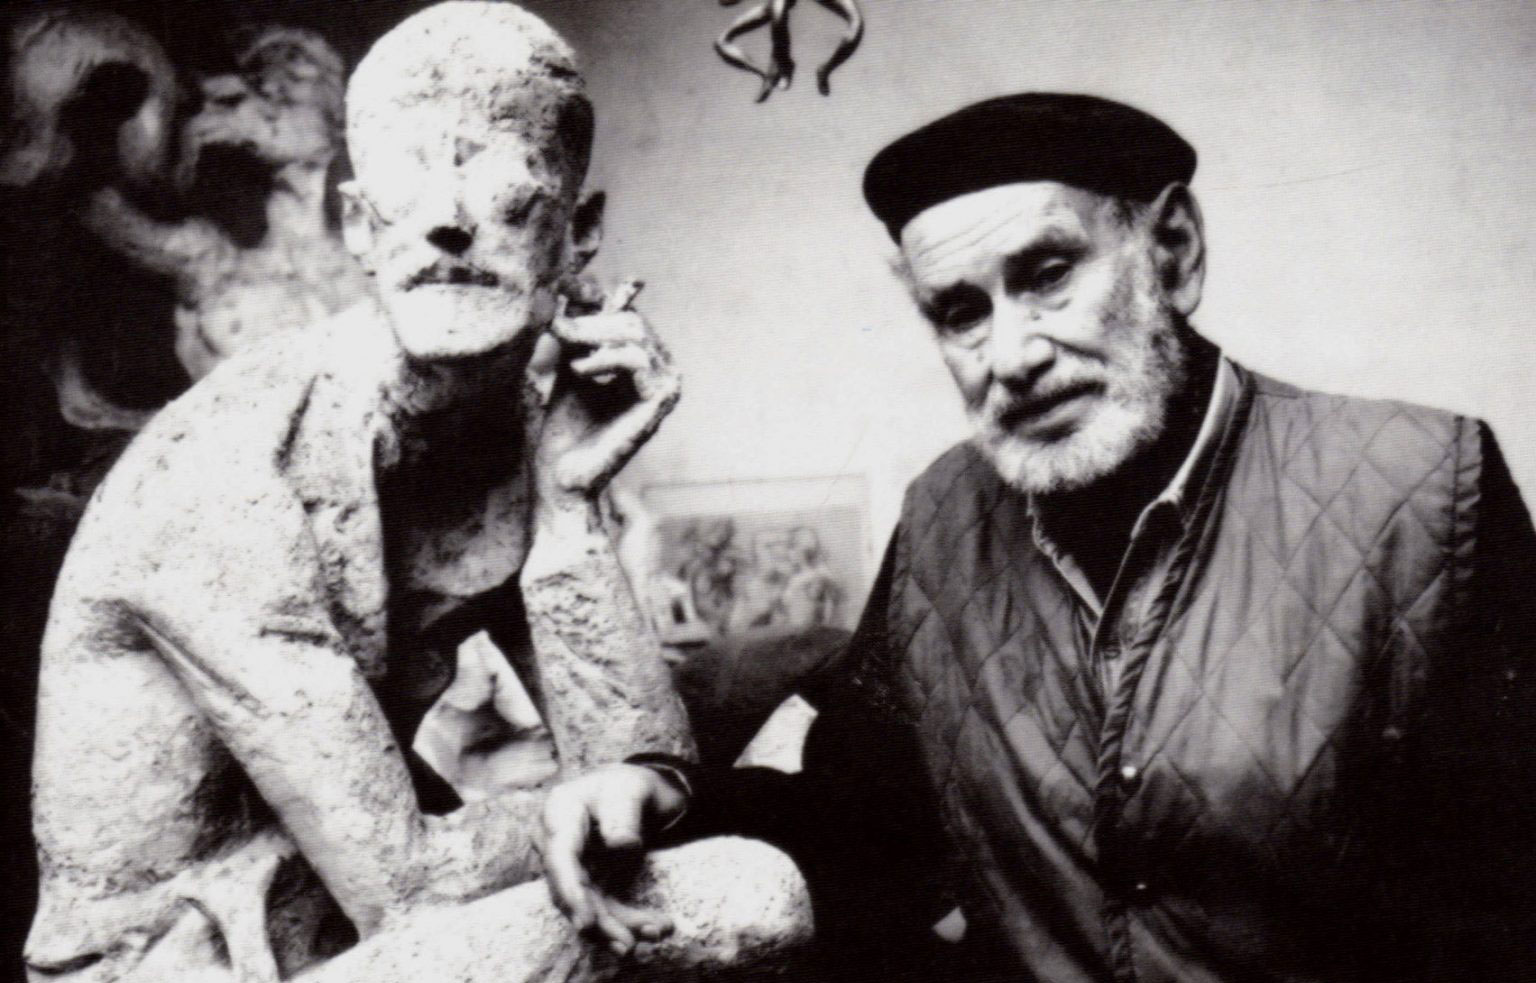 Sculptor Milton Hebald Carving in his Studio in Bracciano, Italy